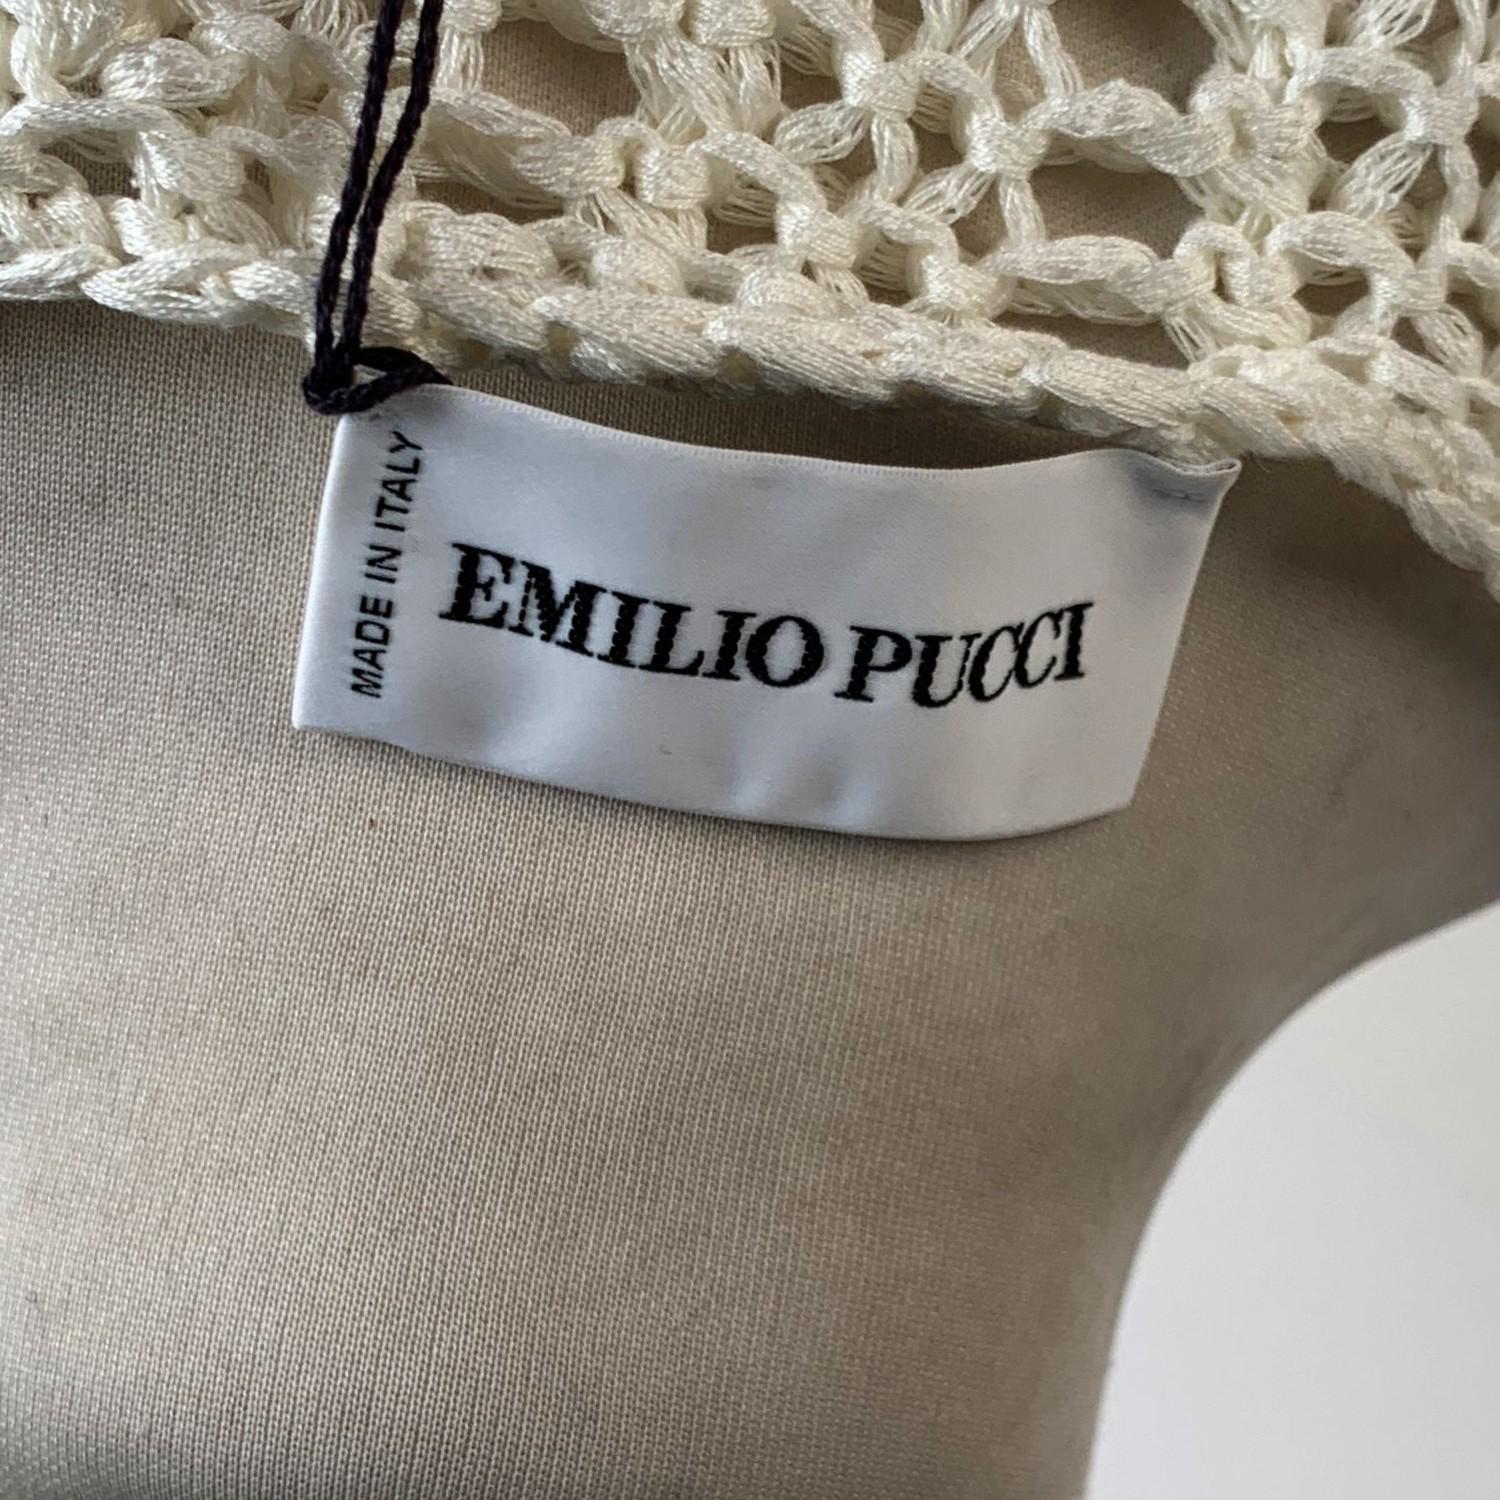 Emilio Pucci by Peter Dundas 2011 White Crochet Maxi Dress Size 40 IT 2